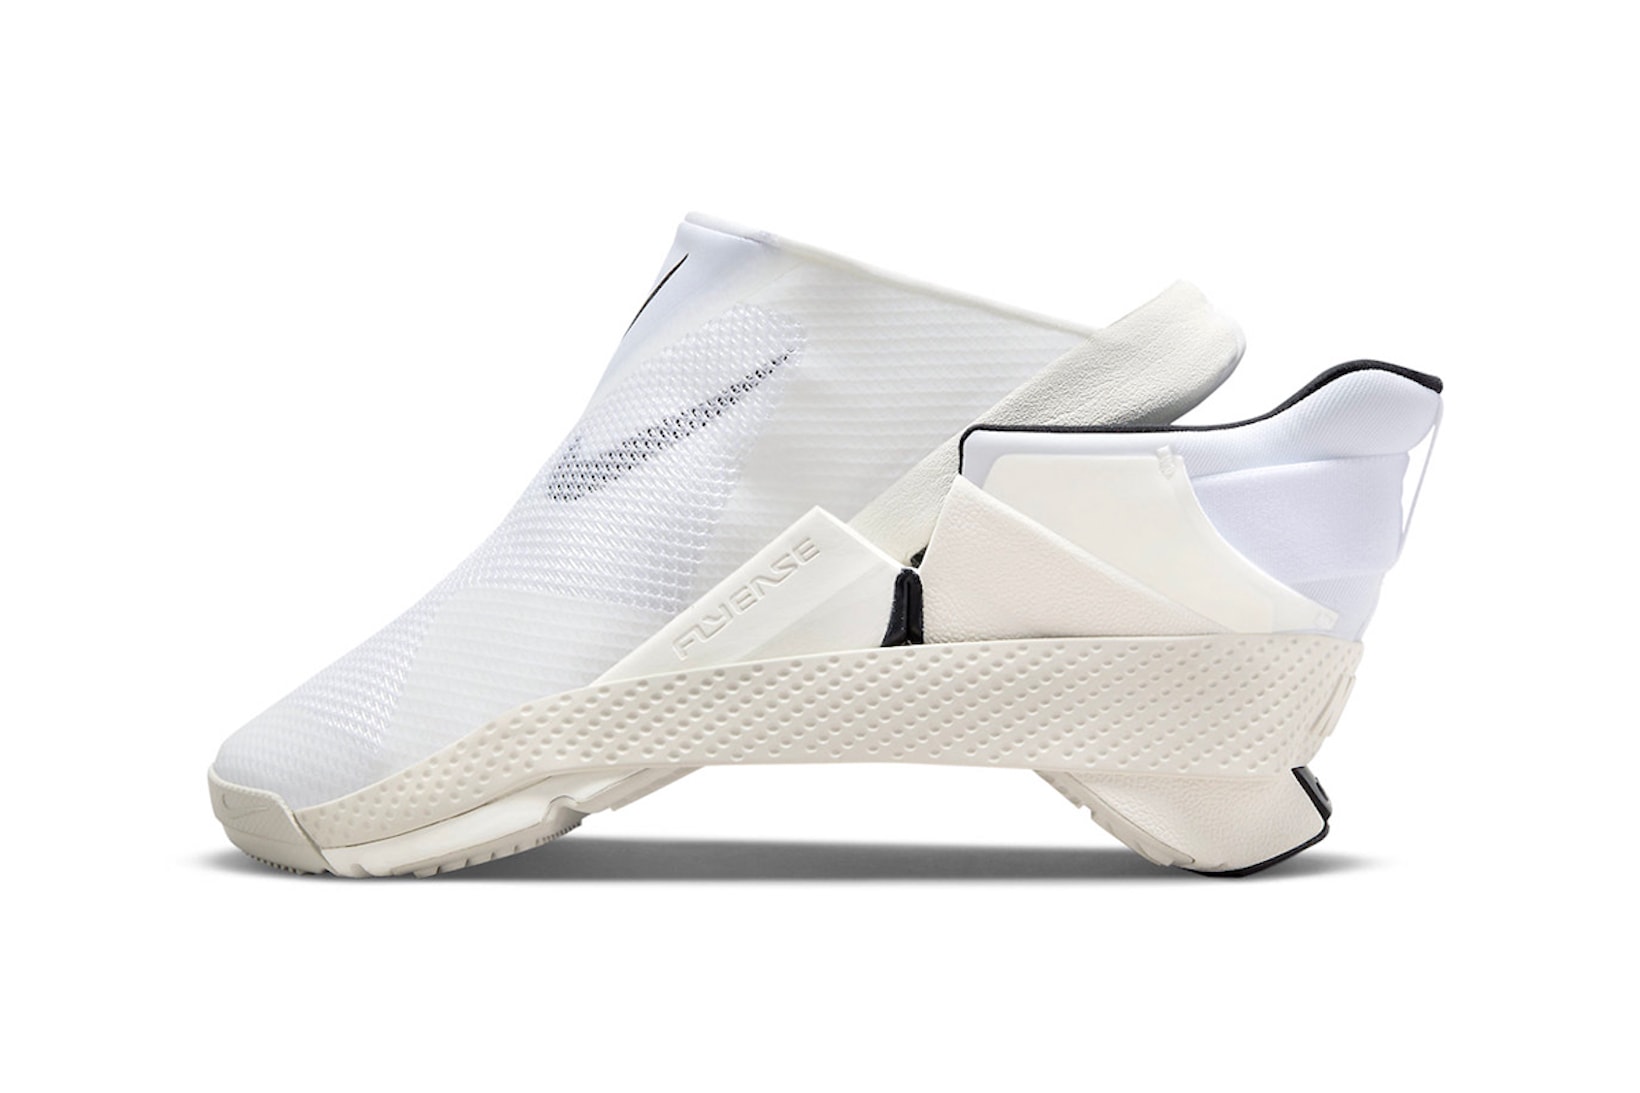 Nike GO FlyEase White Sail Sneakers Footwear Kicks Shoes